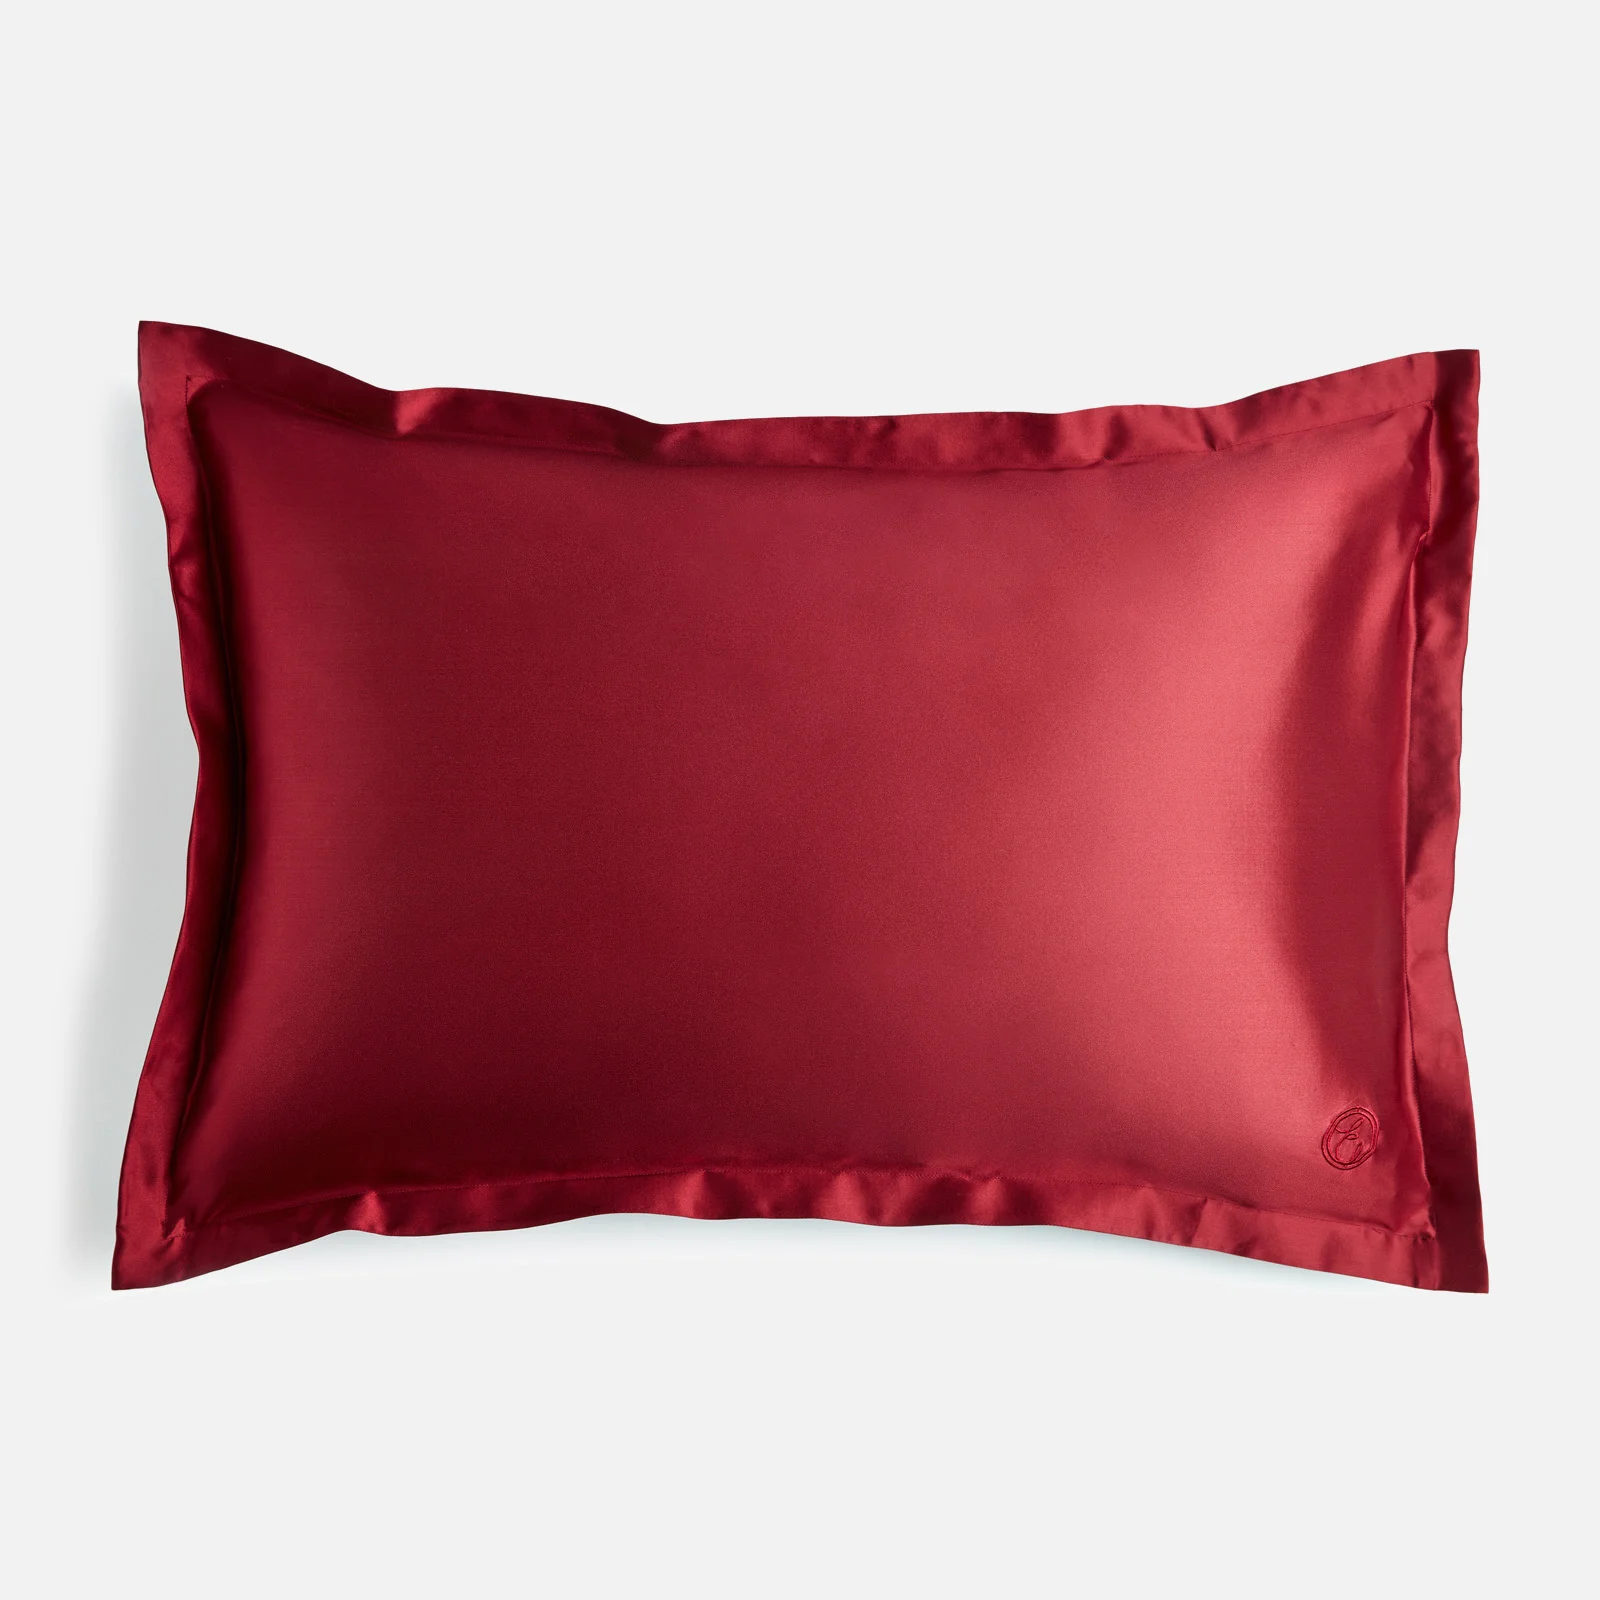 ESPA Oxford Edge Silk Pillowcase - Claret Rose Image 1